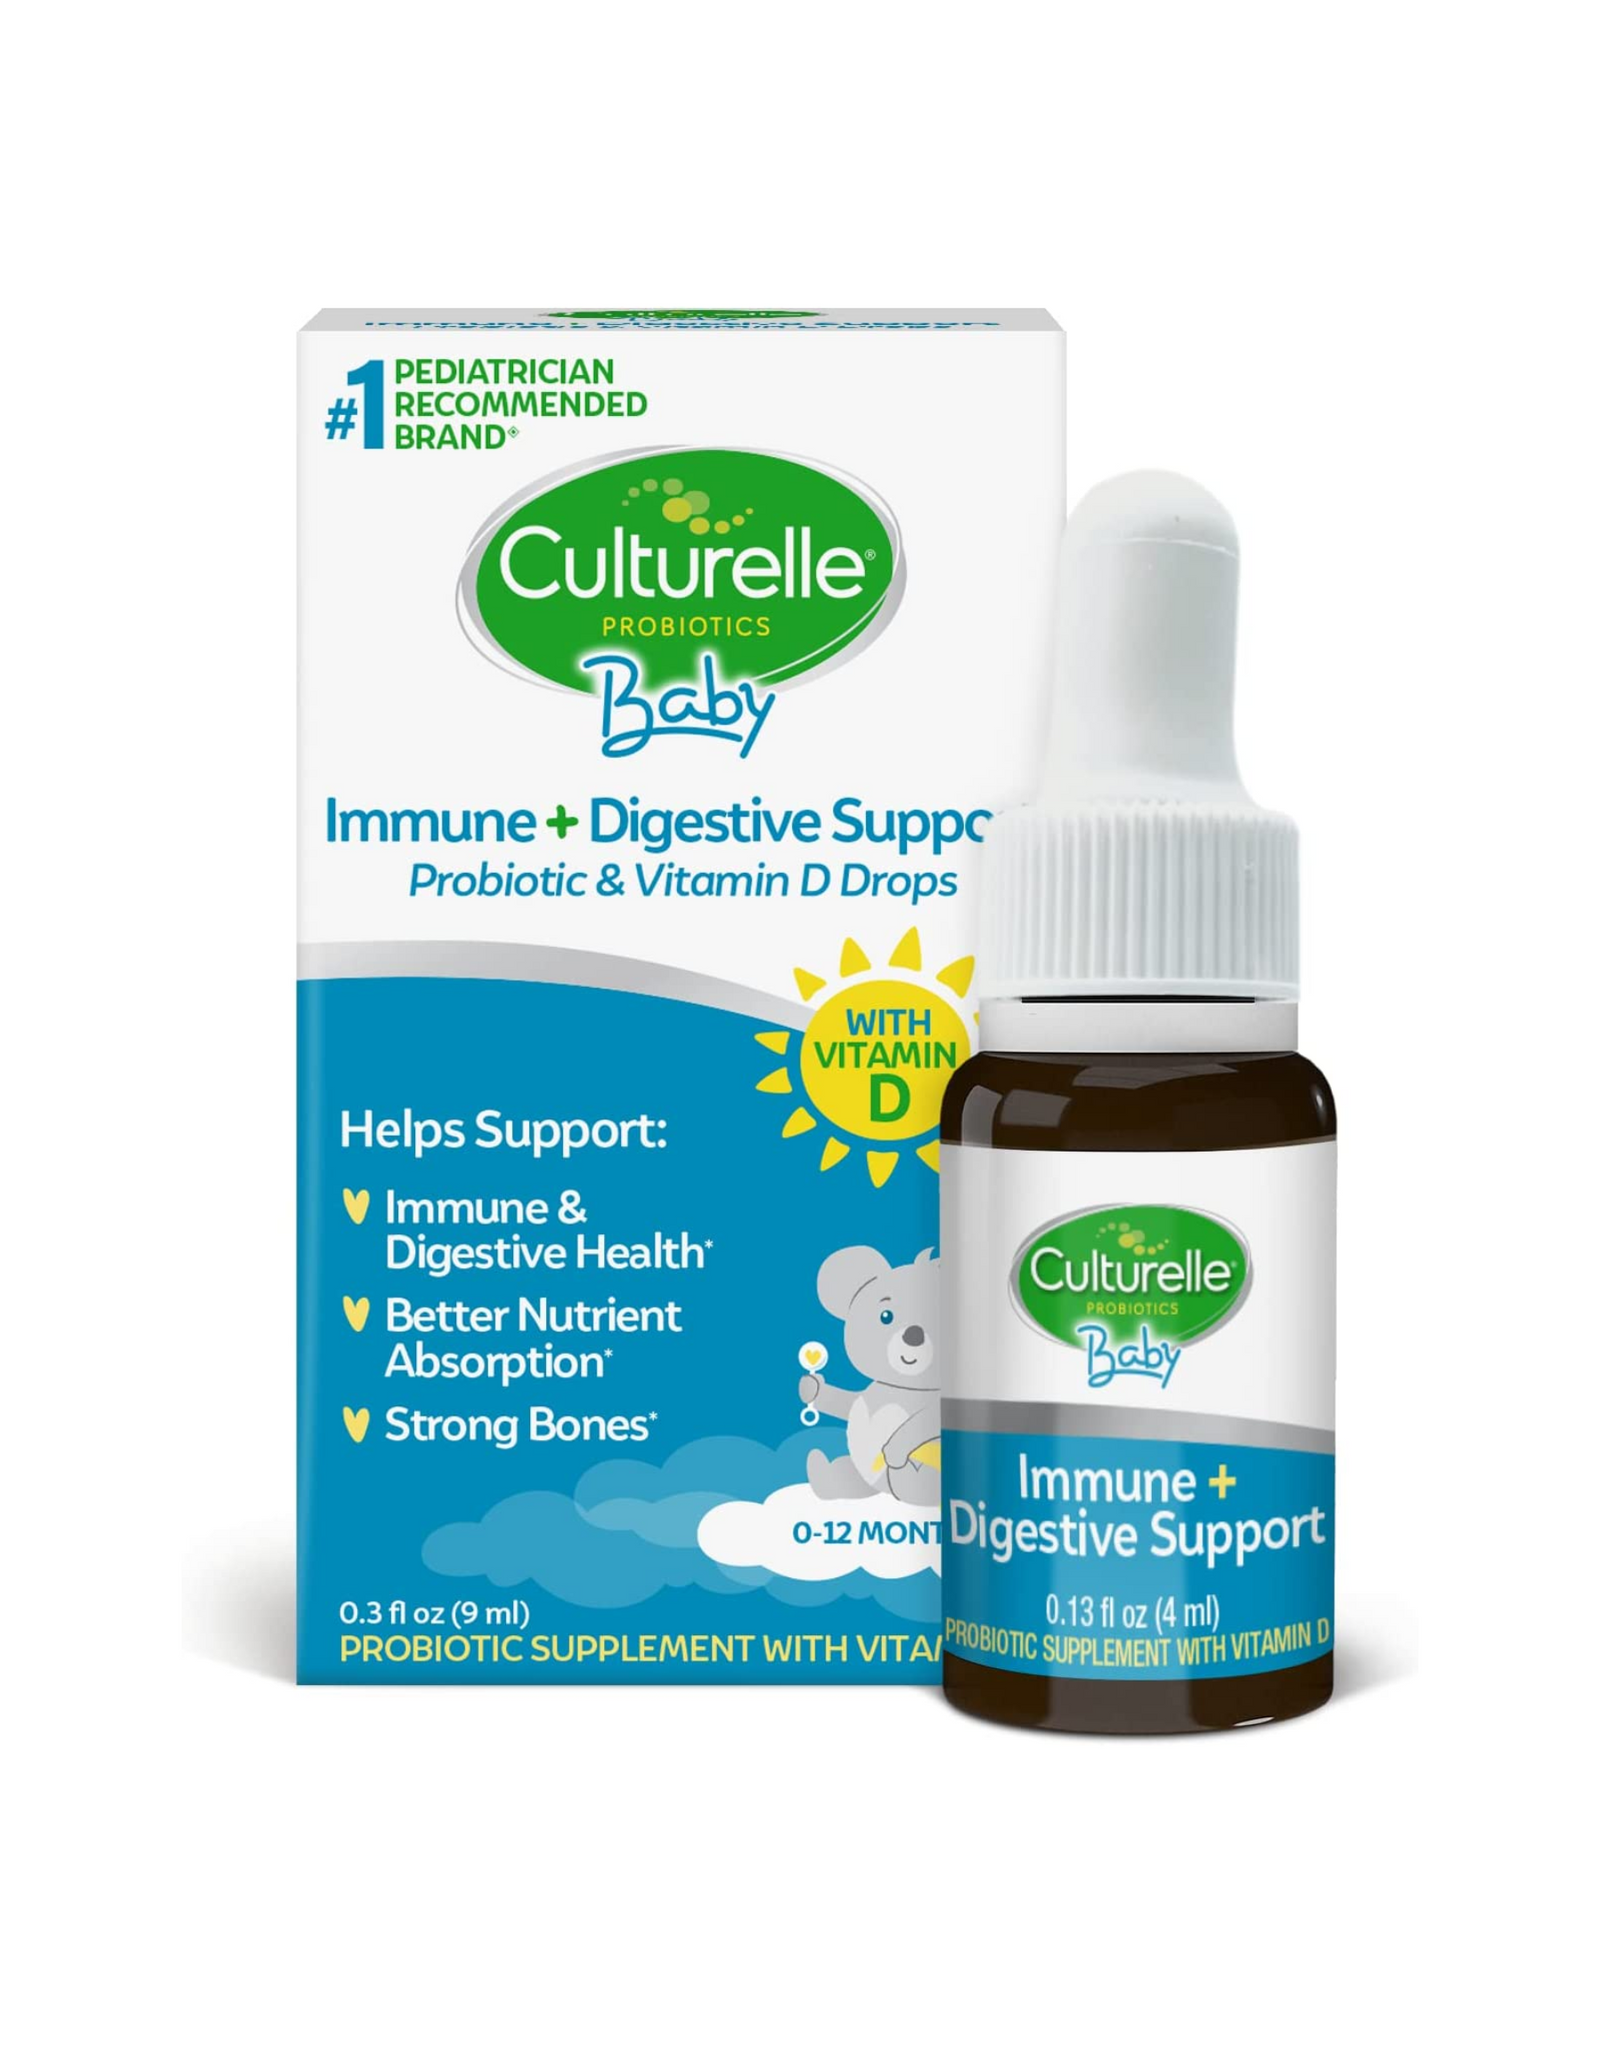 Culturelle Baby Immune & Digestive Support Probiotic + Vitamin D Drops, for Infants & Newborns 0-12 Months, 0.13 fl oz